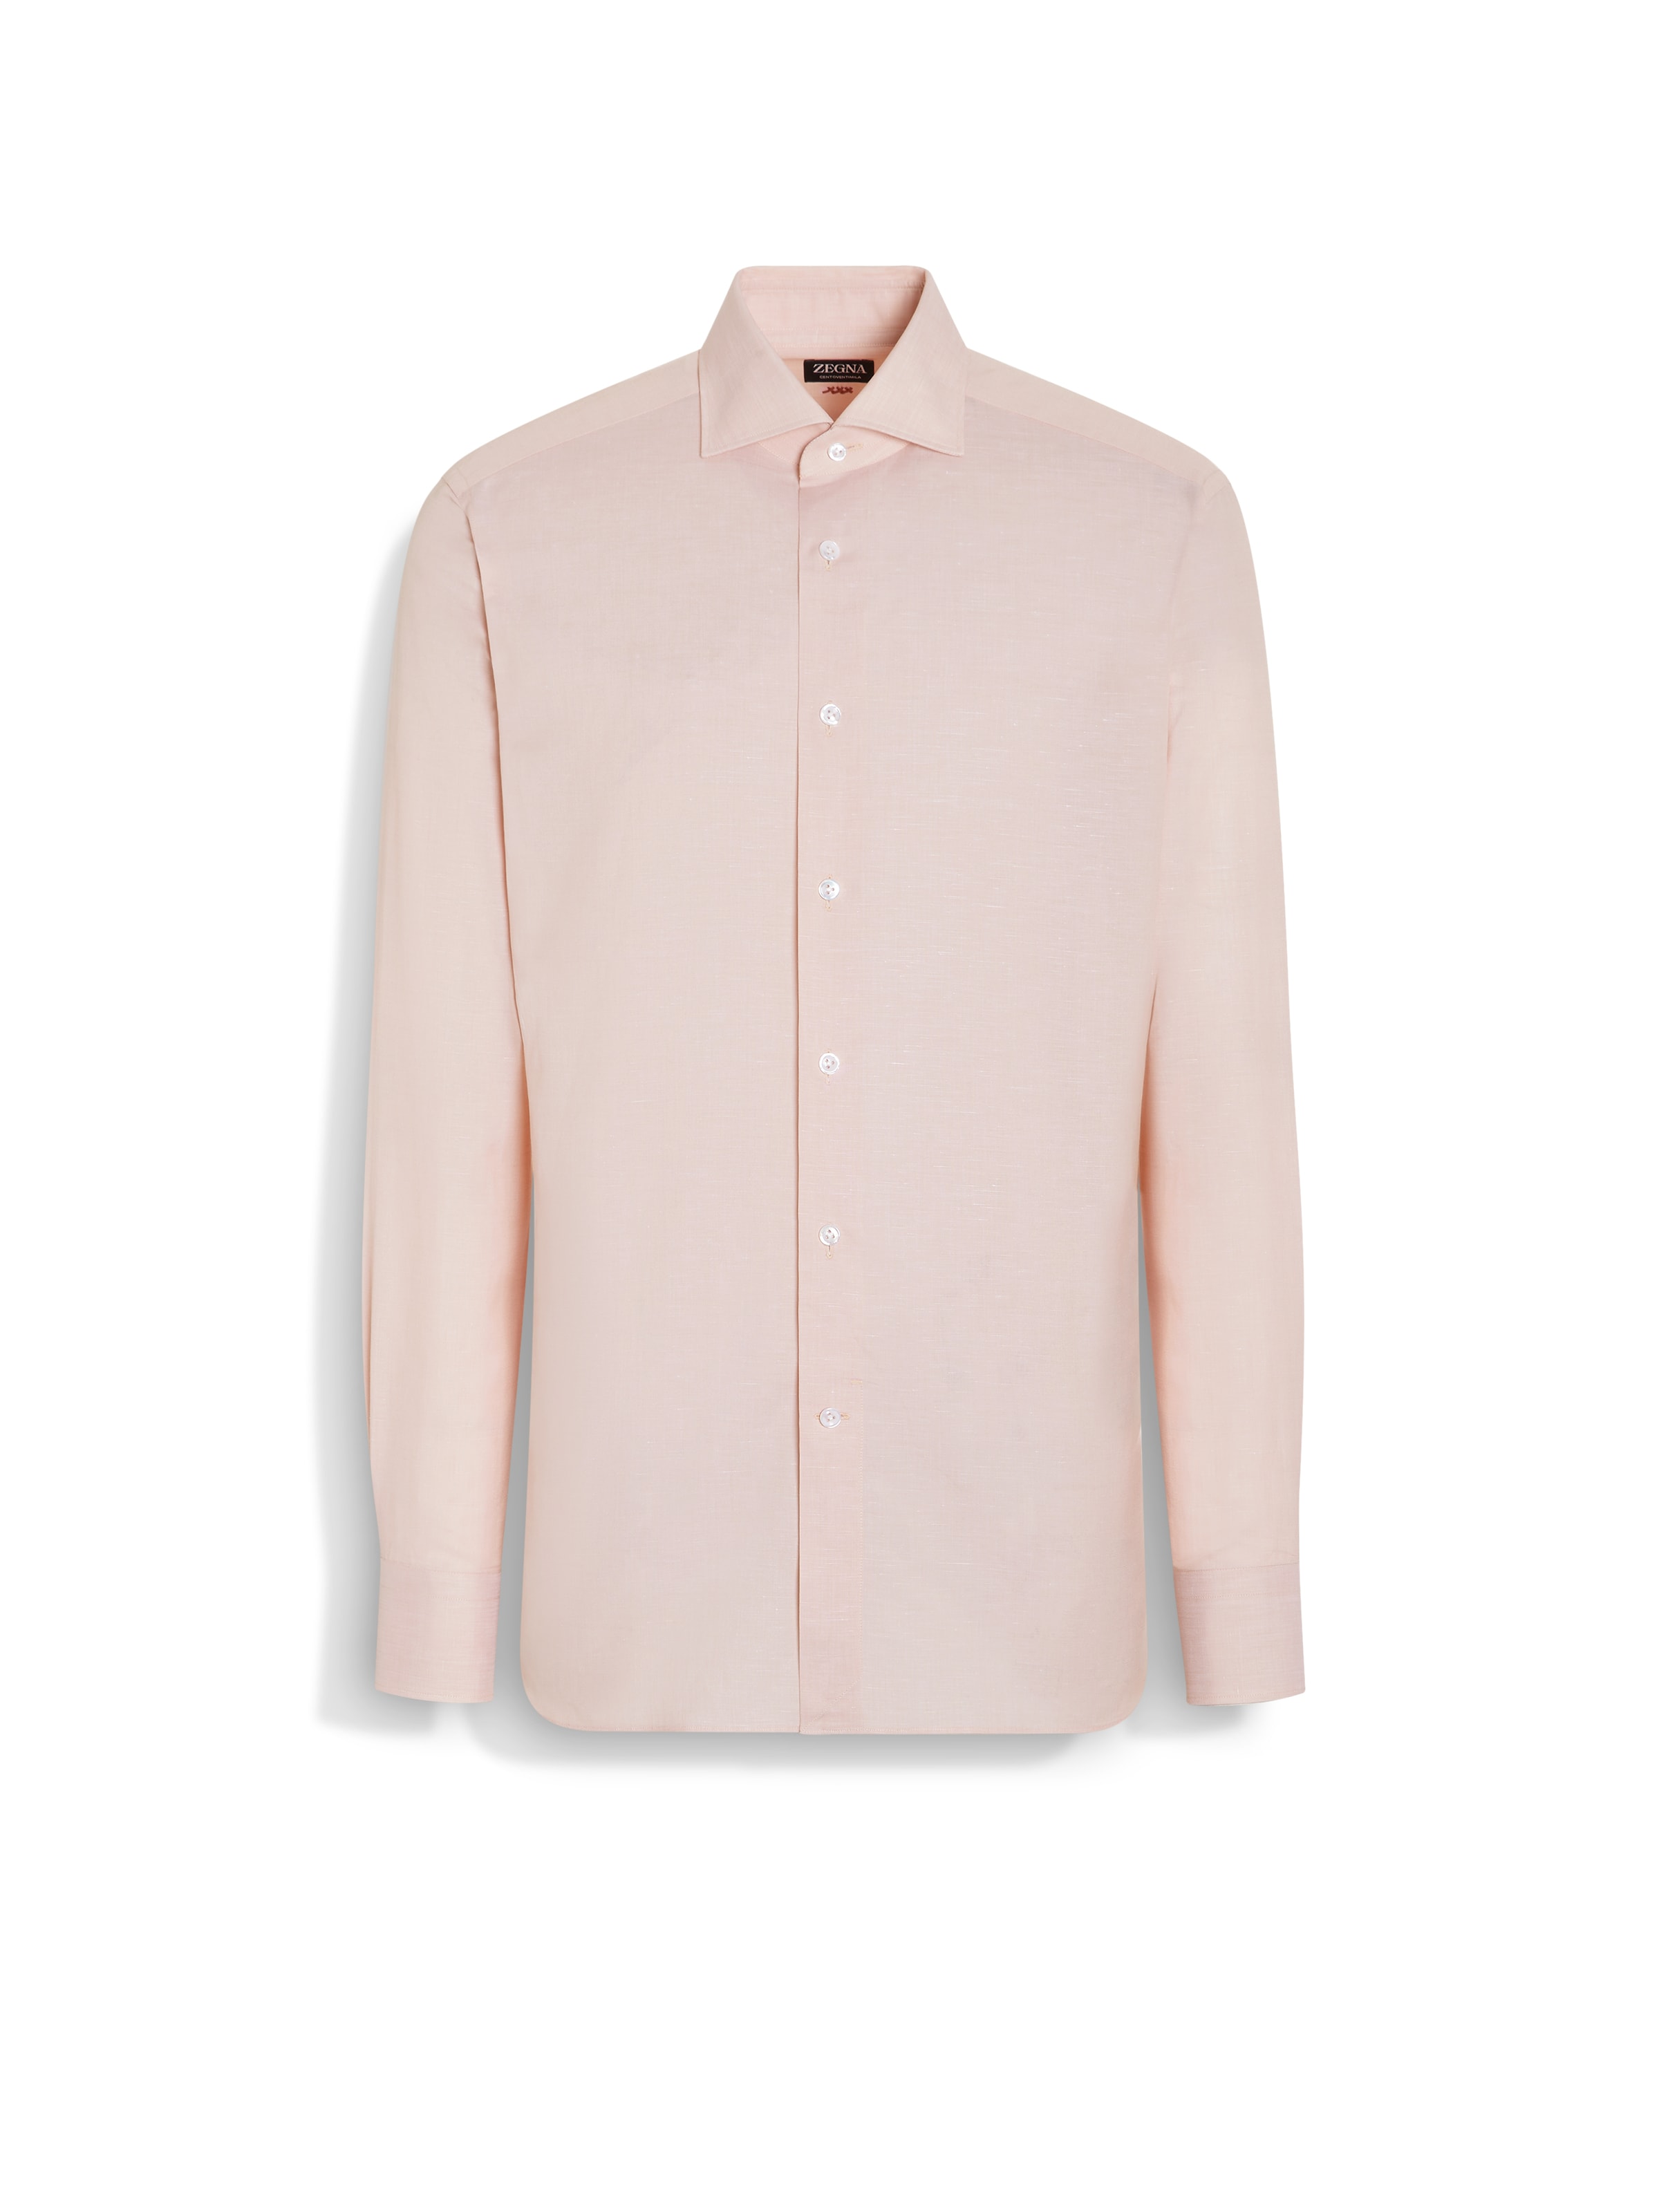 Zegna Light Pink Centoventimila Cotton And Linen Shirt